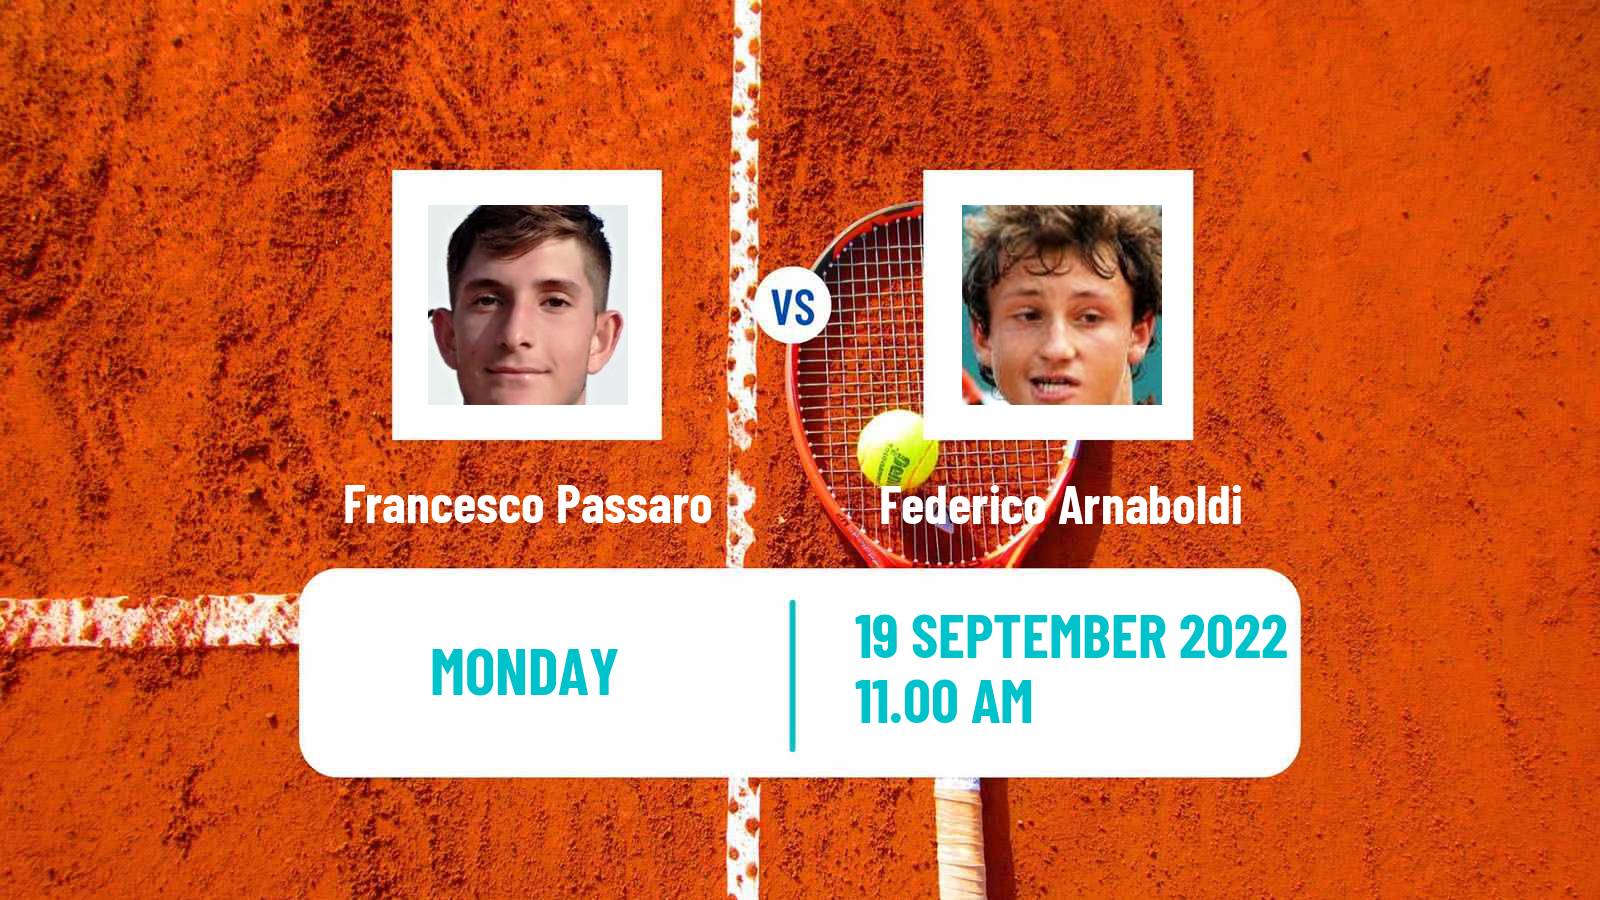 Tennis ATP Challenger Francesco Passaro - Federico Arnaboldi